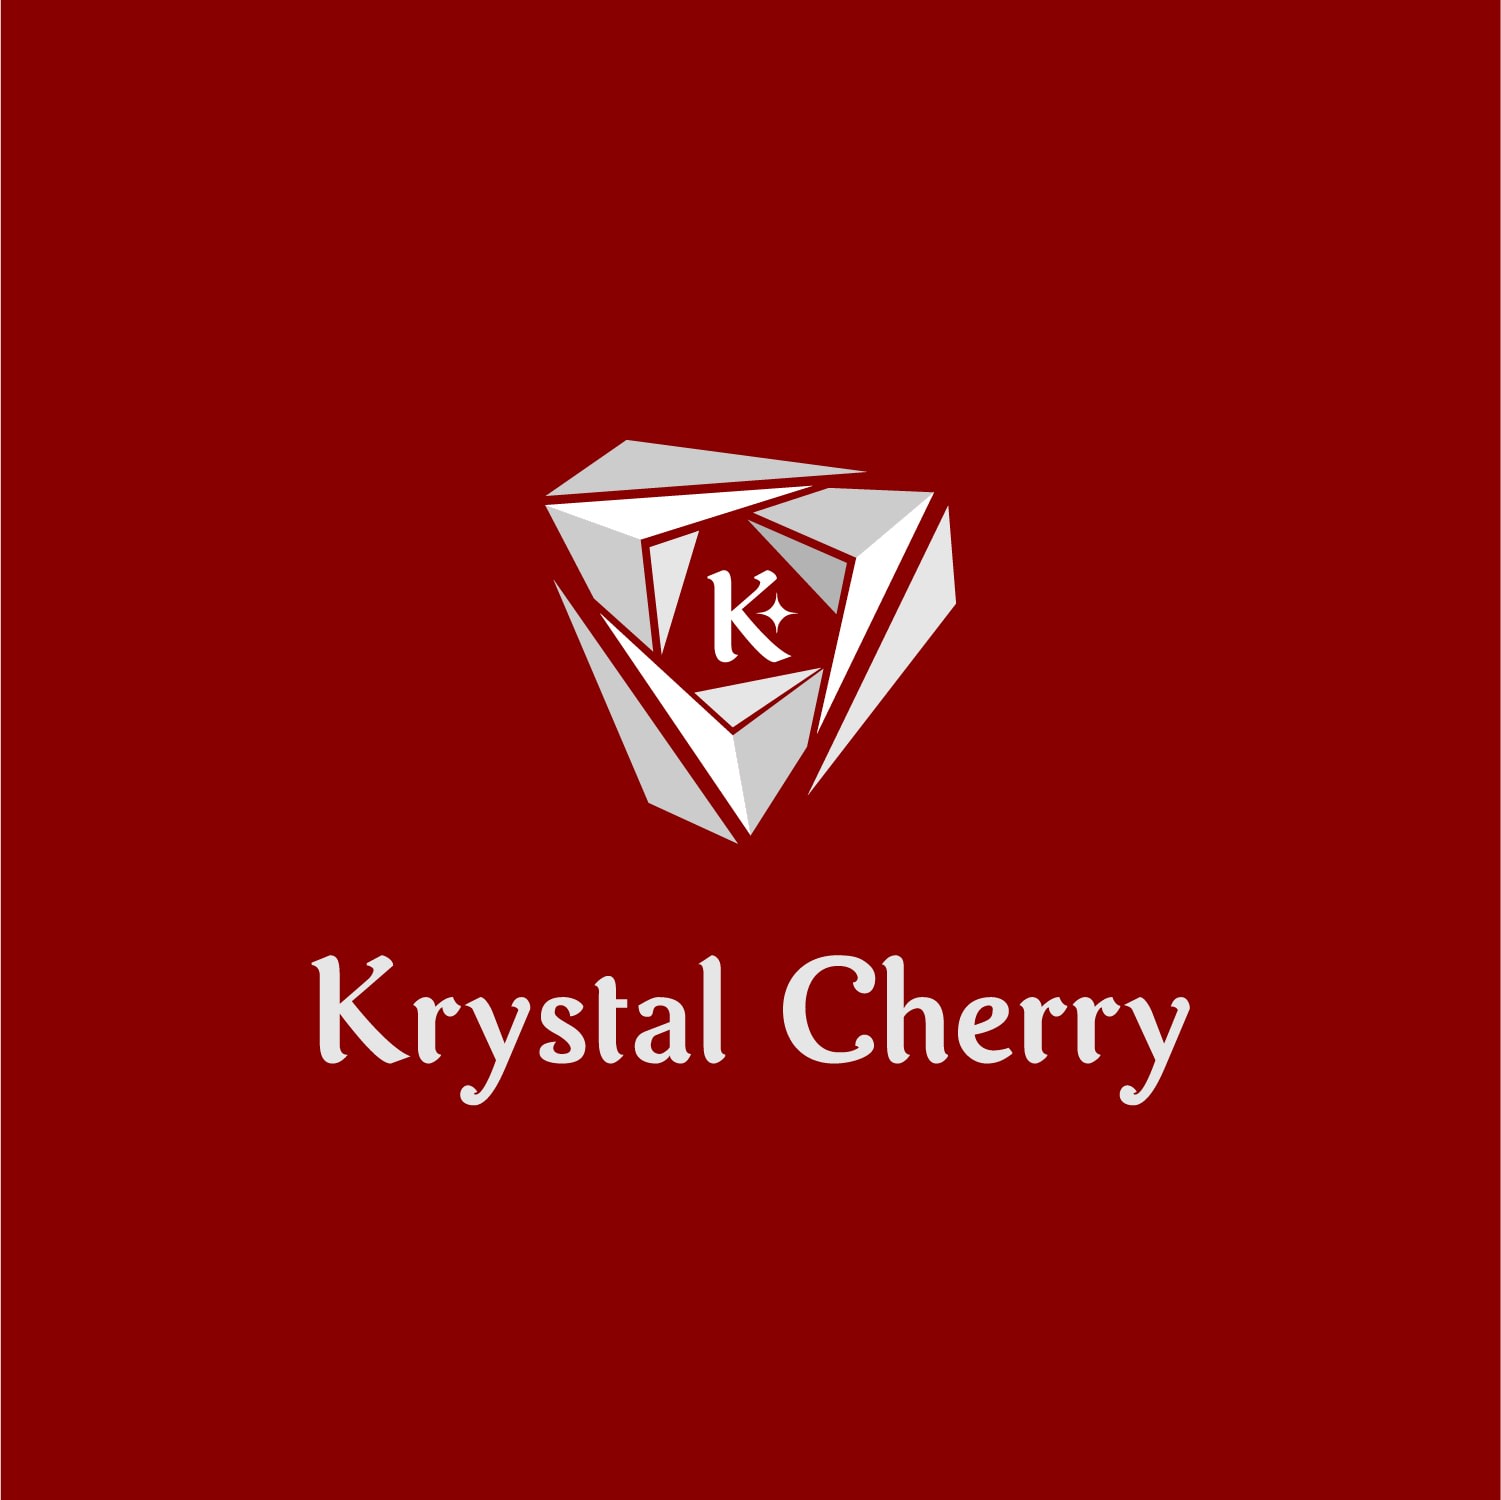 Krystal Cherry